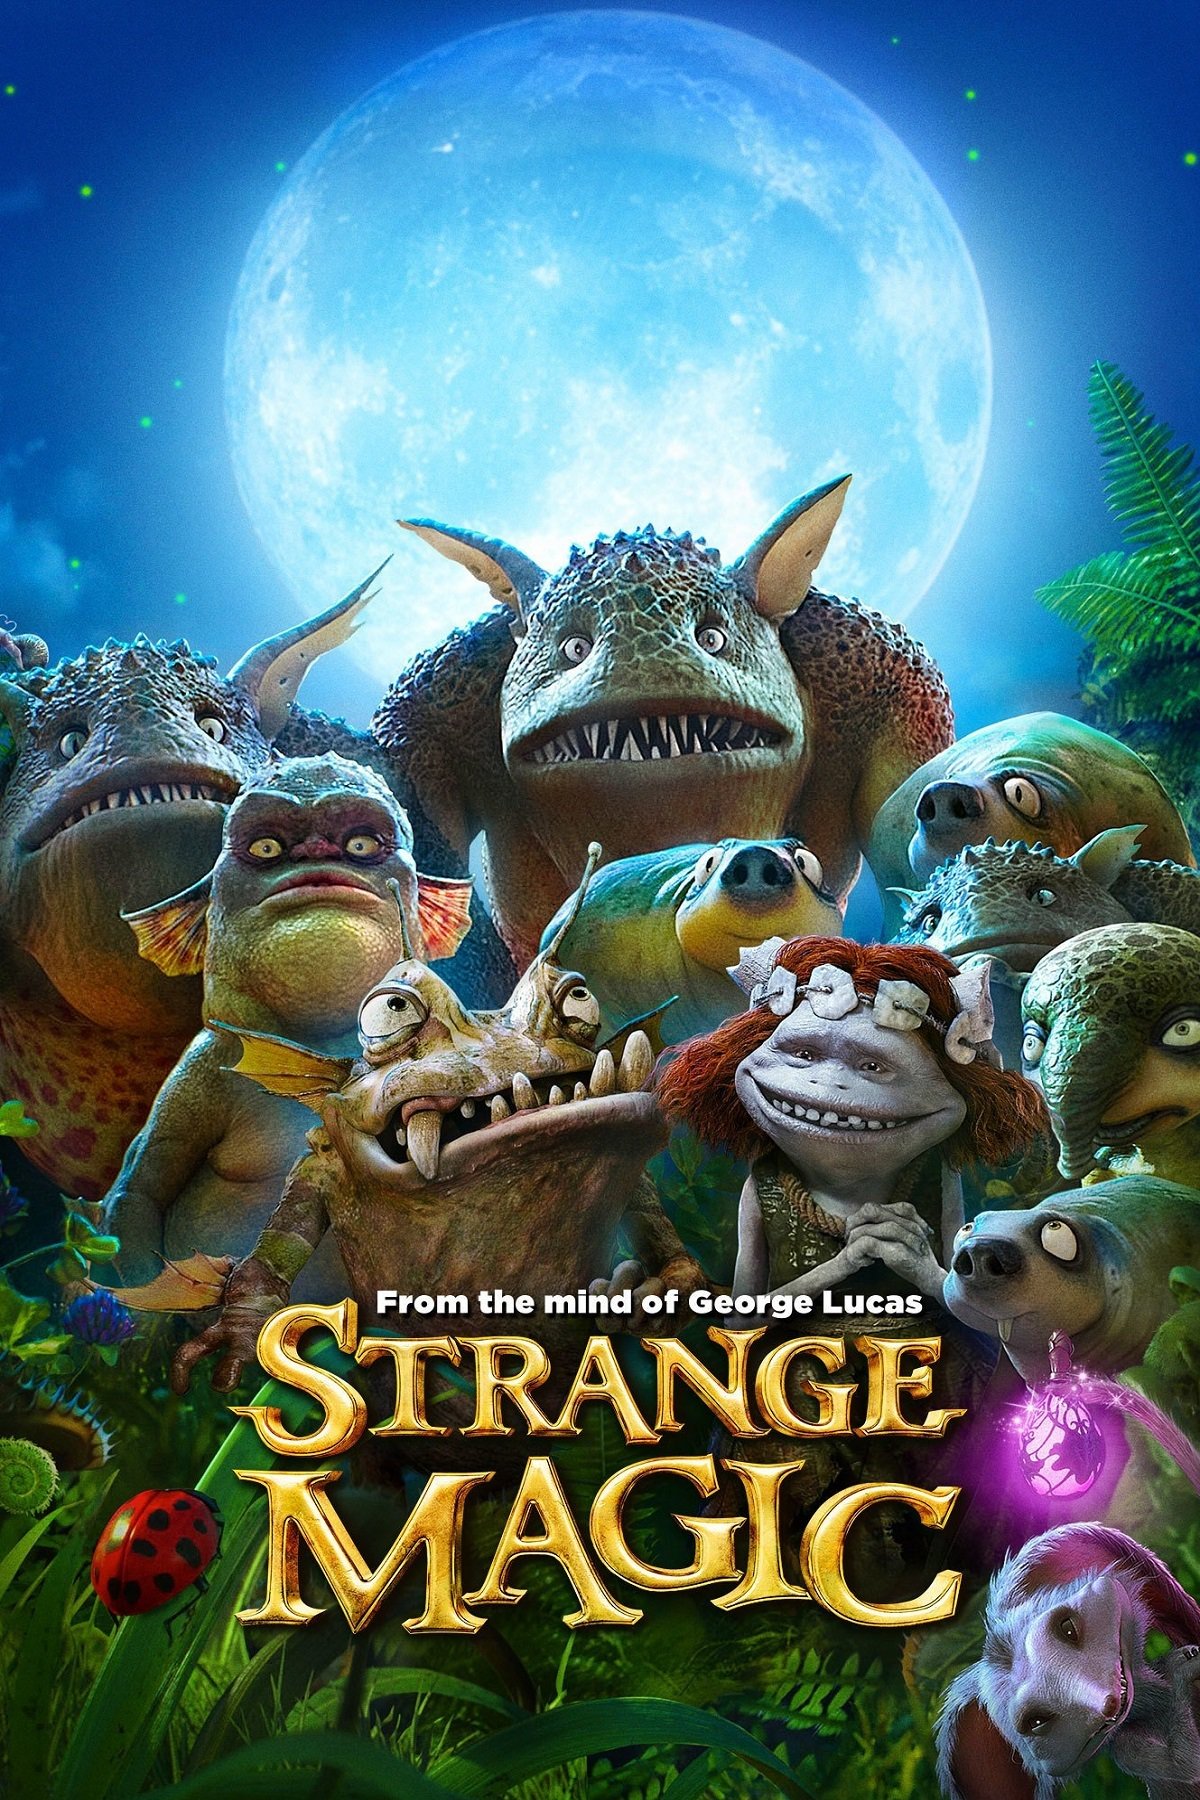 Plakat von "Strange Magic"